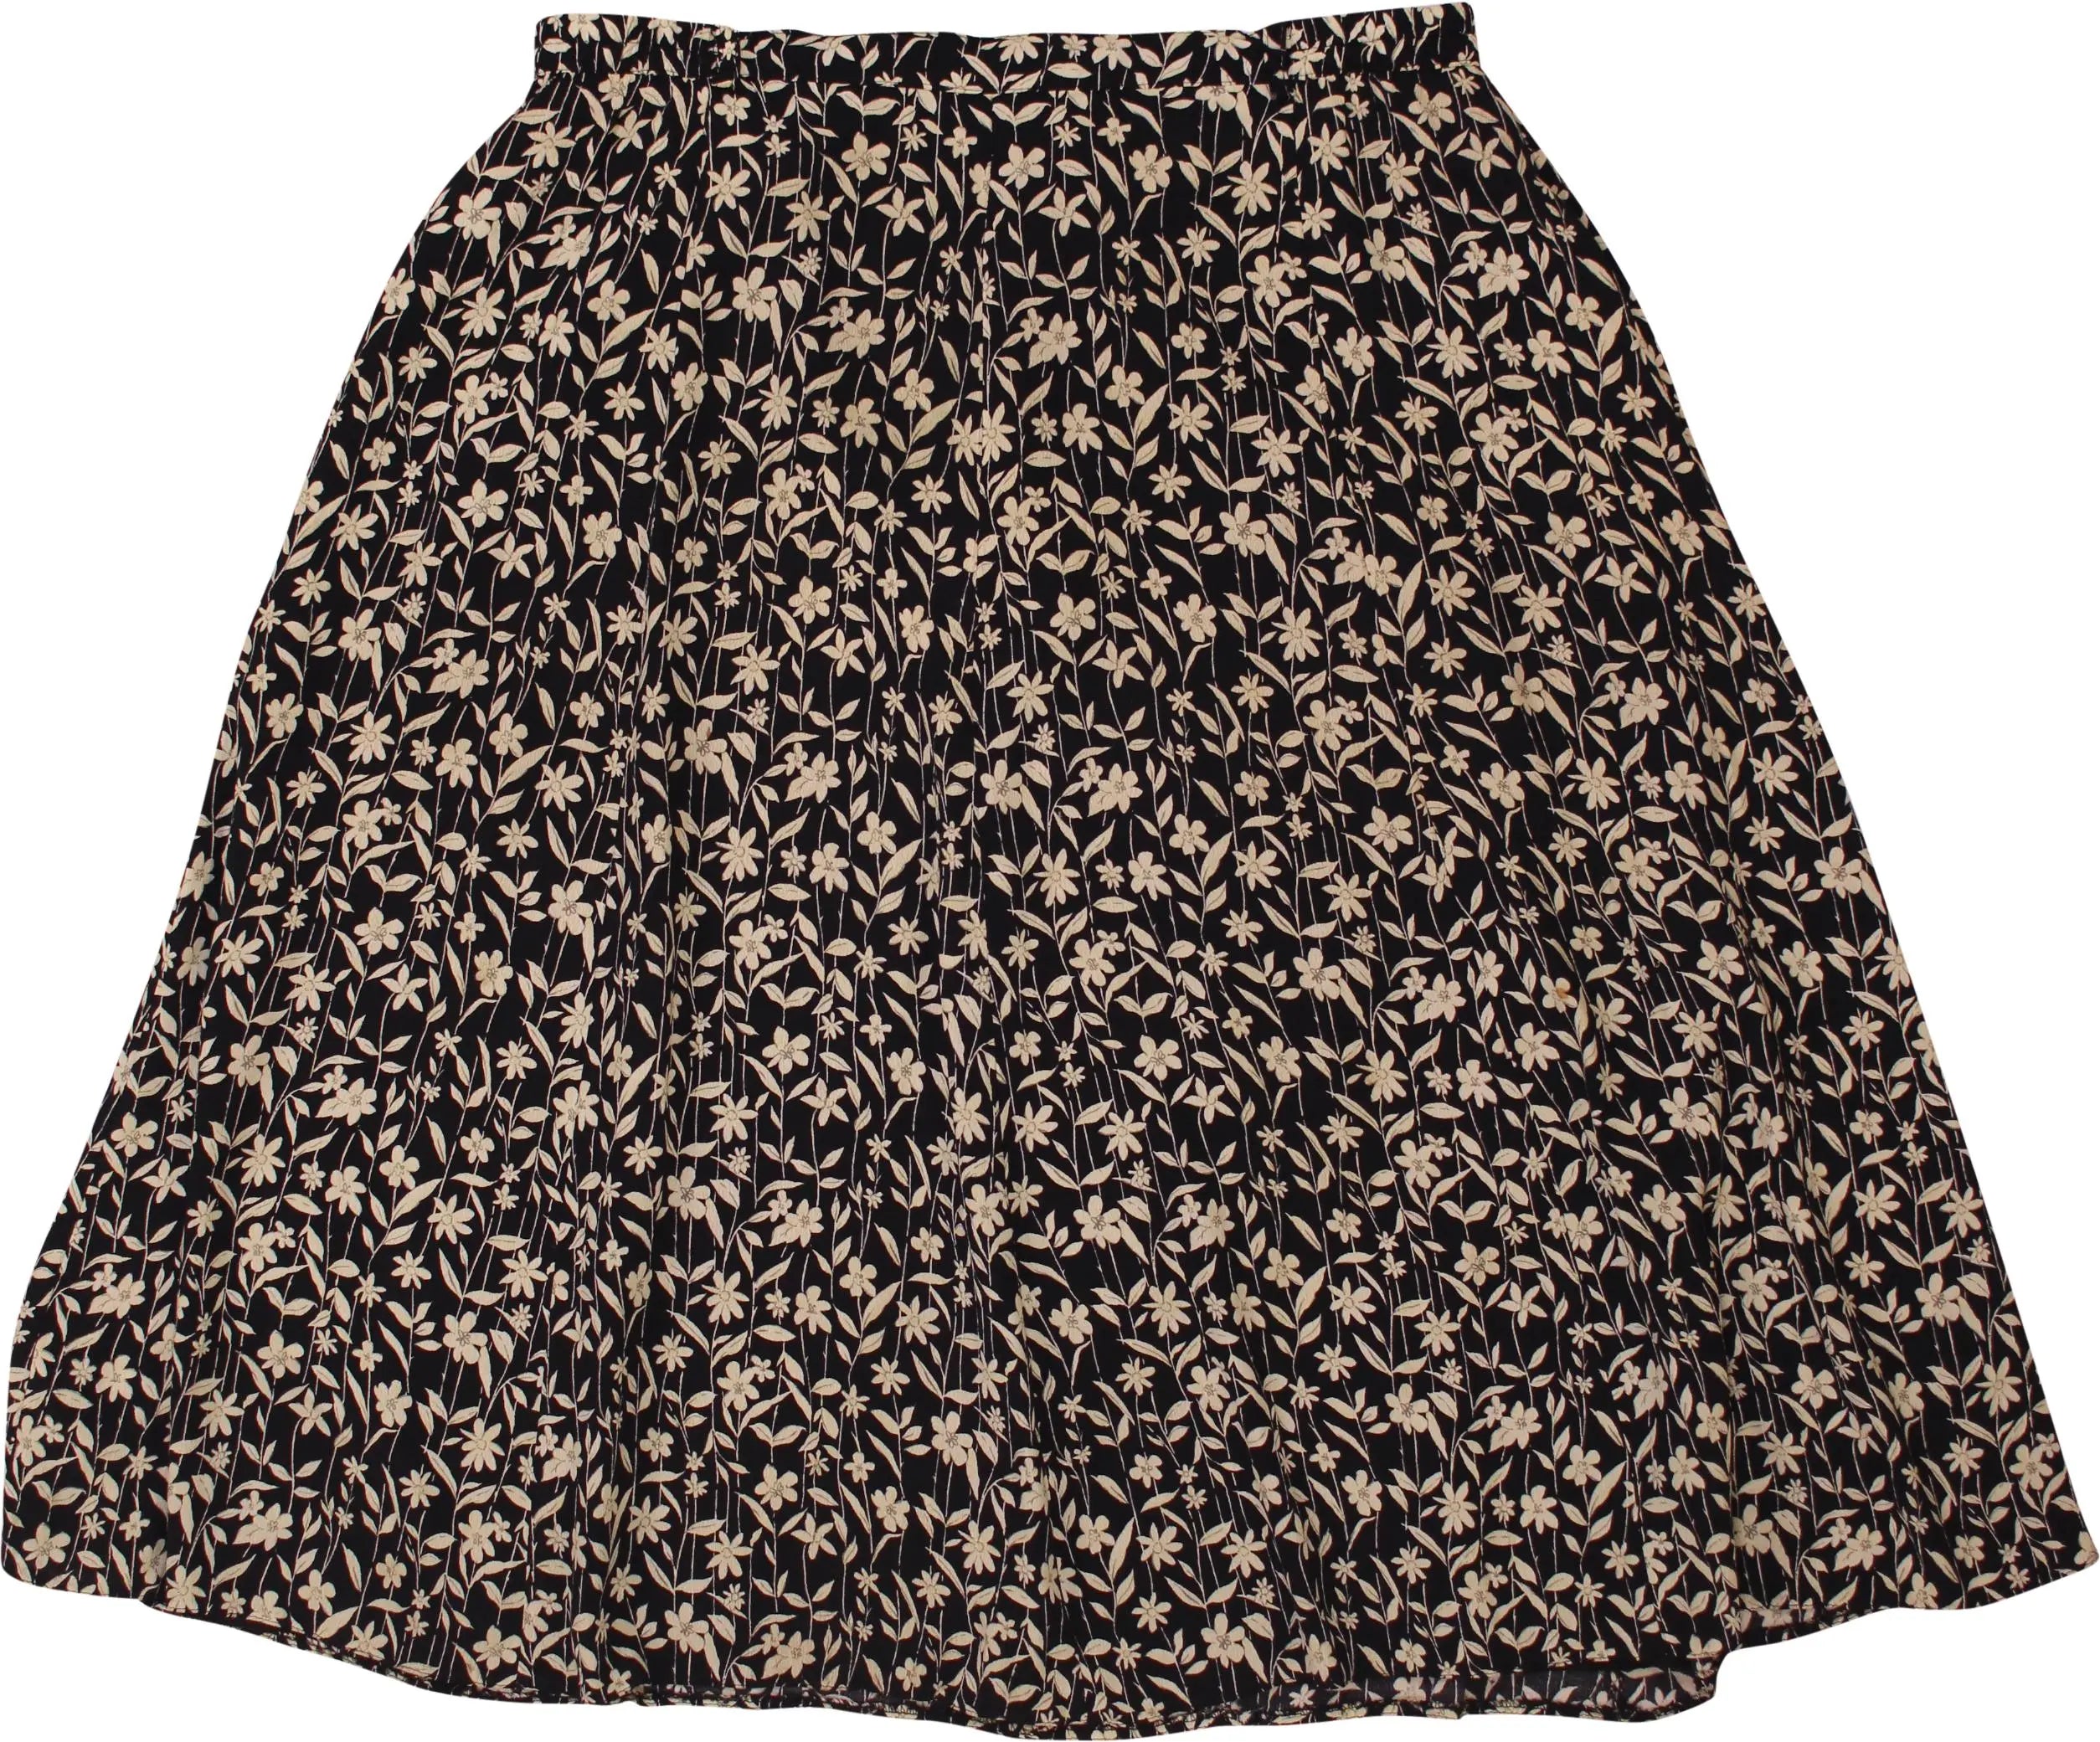 Banken Coordinates - 80s Skirt- ThriftTale.com - Vintage and second handclothing